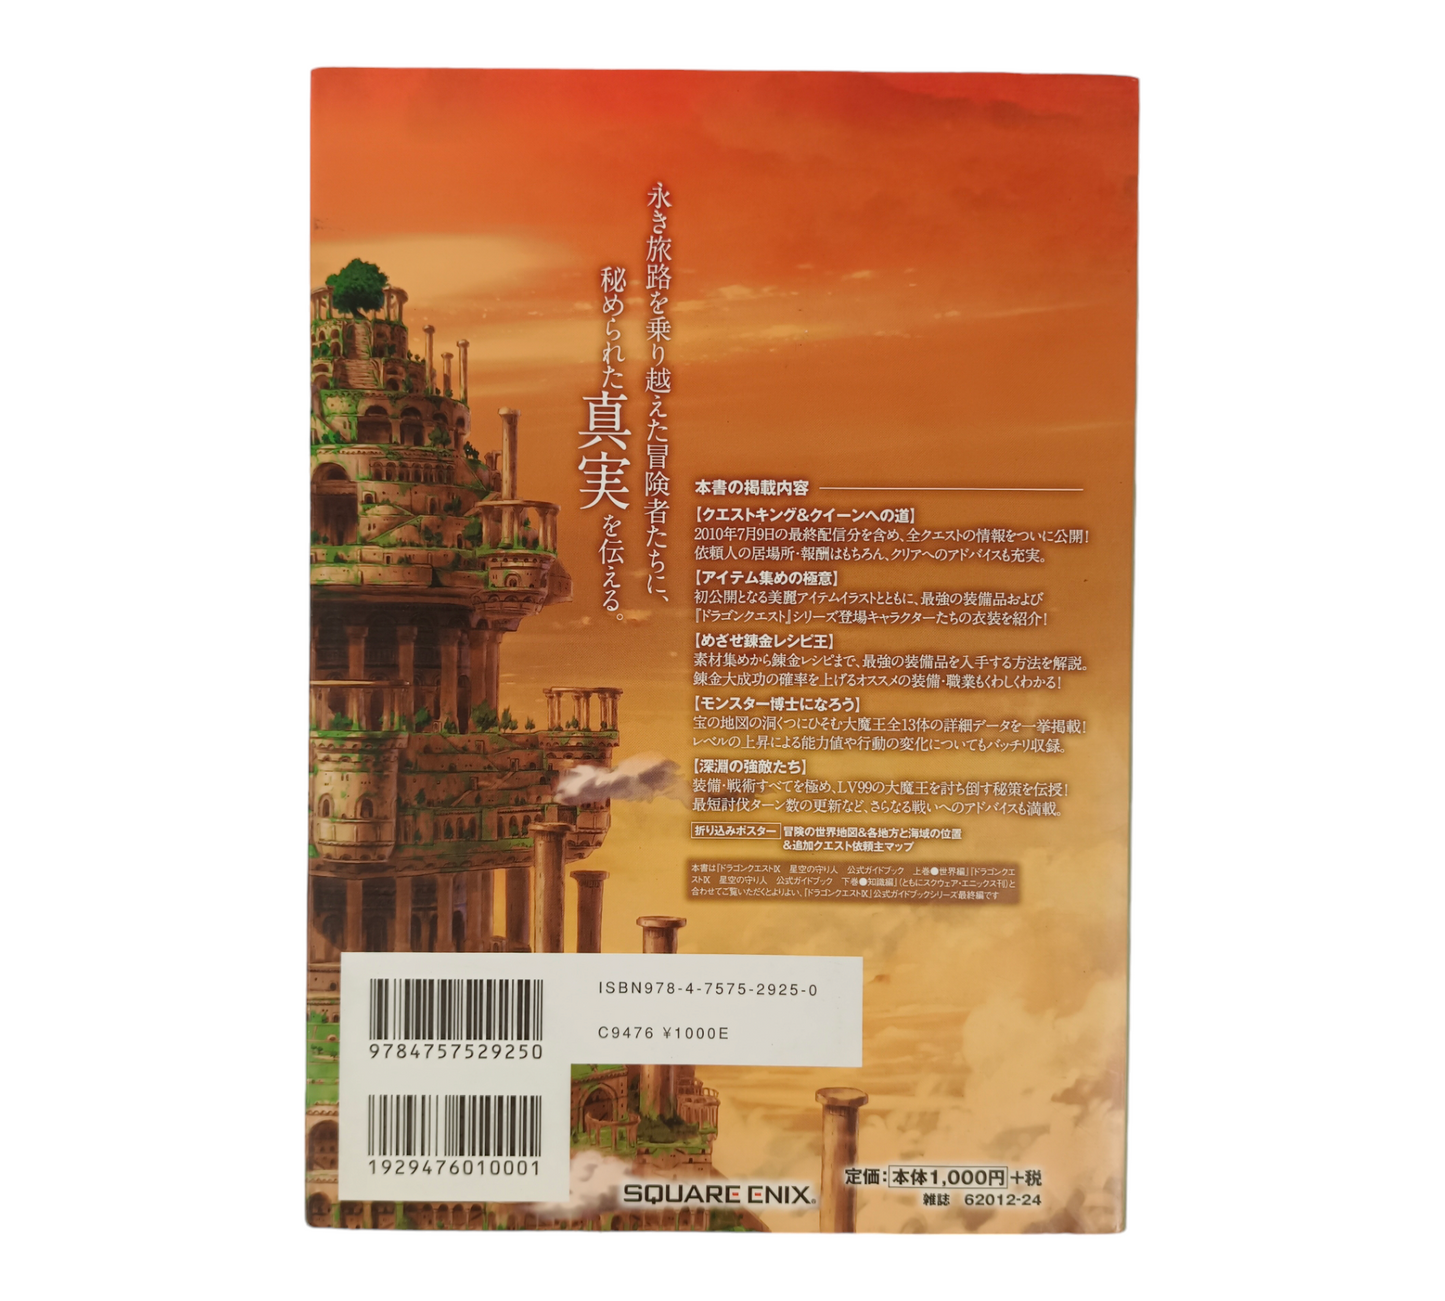 Guide officiel Dragon Quest IX